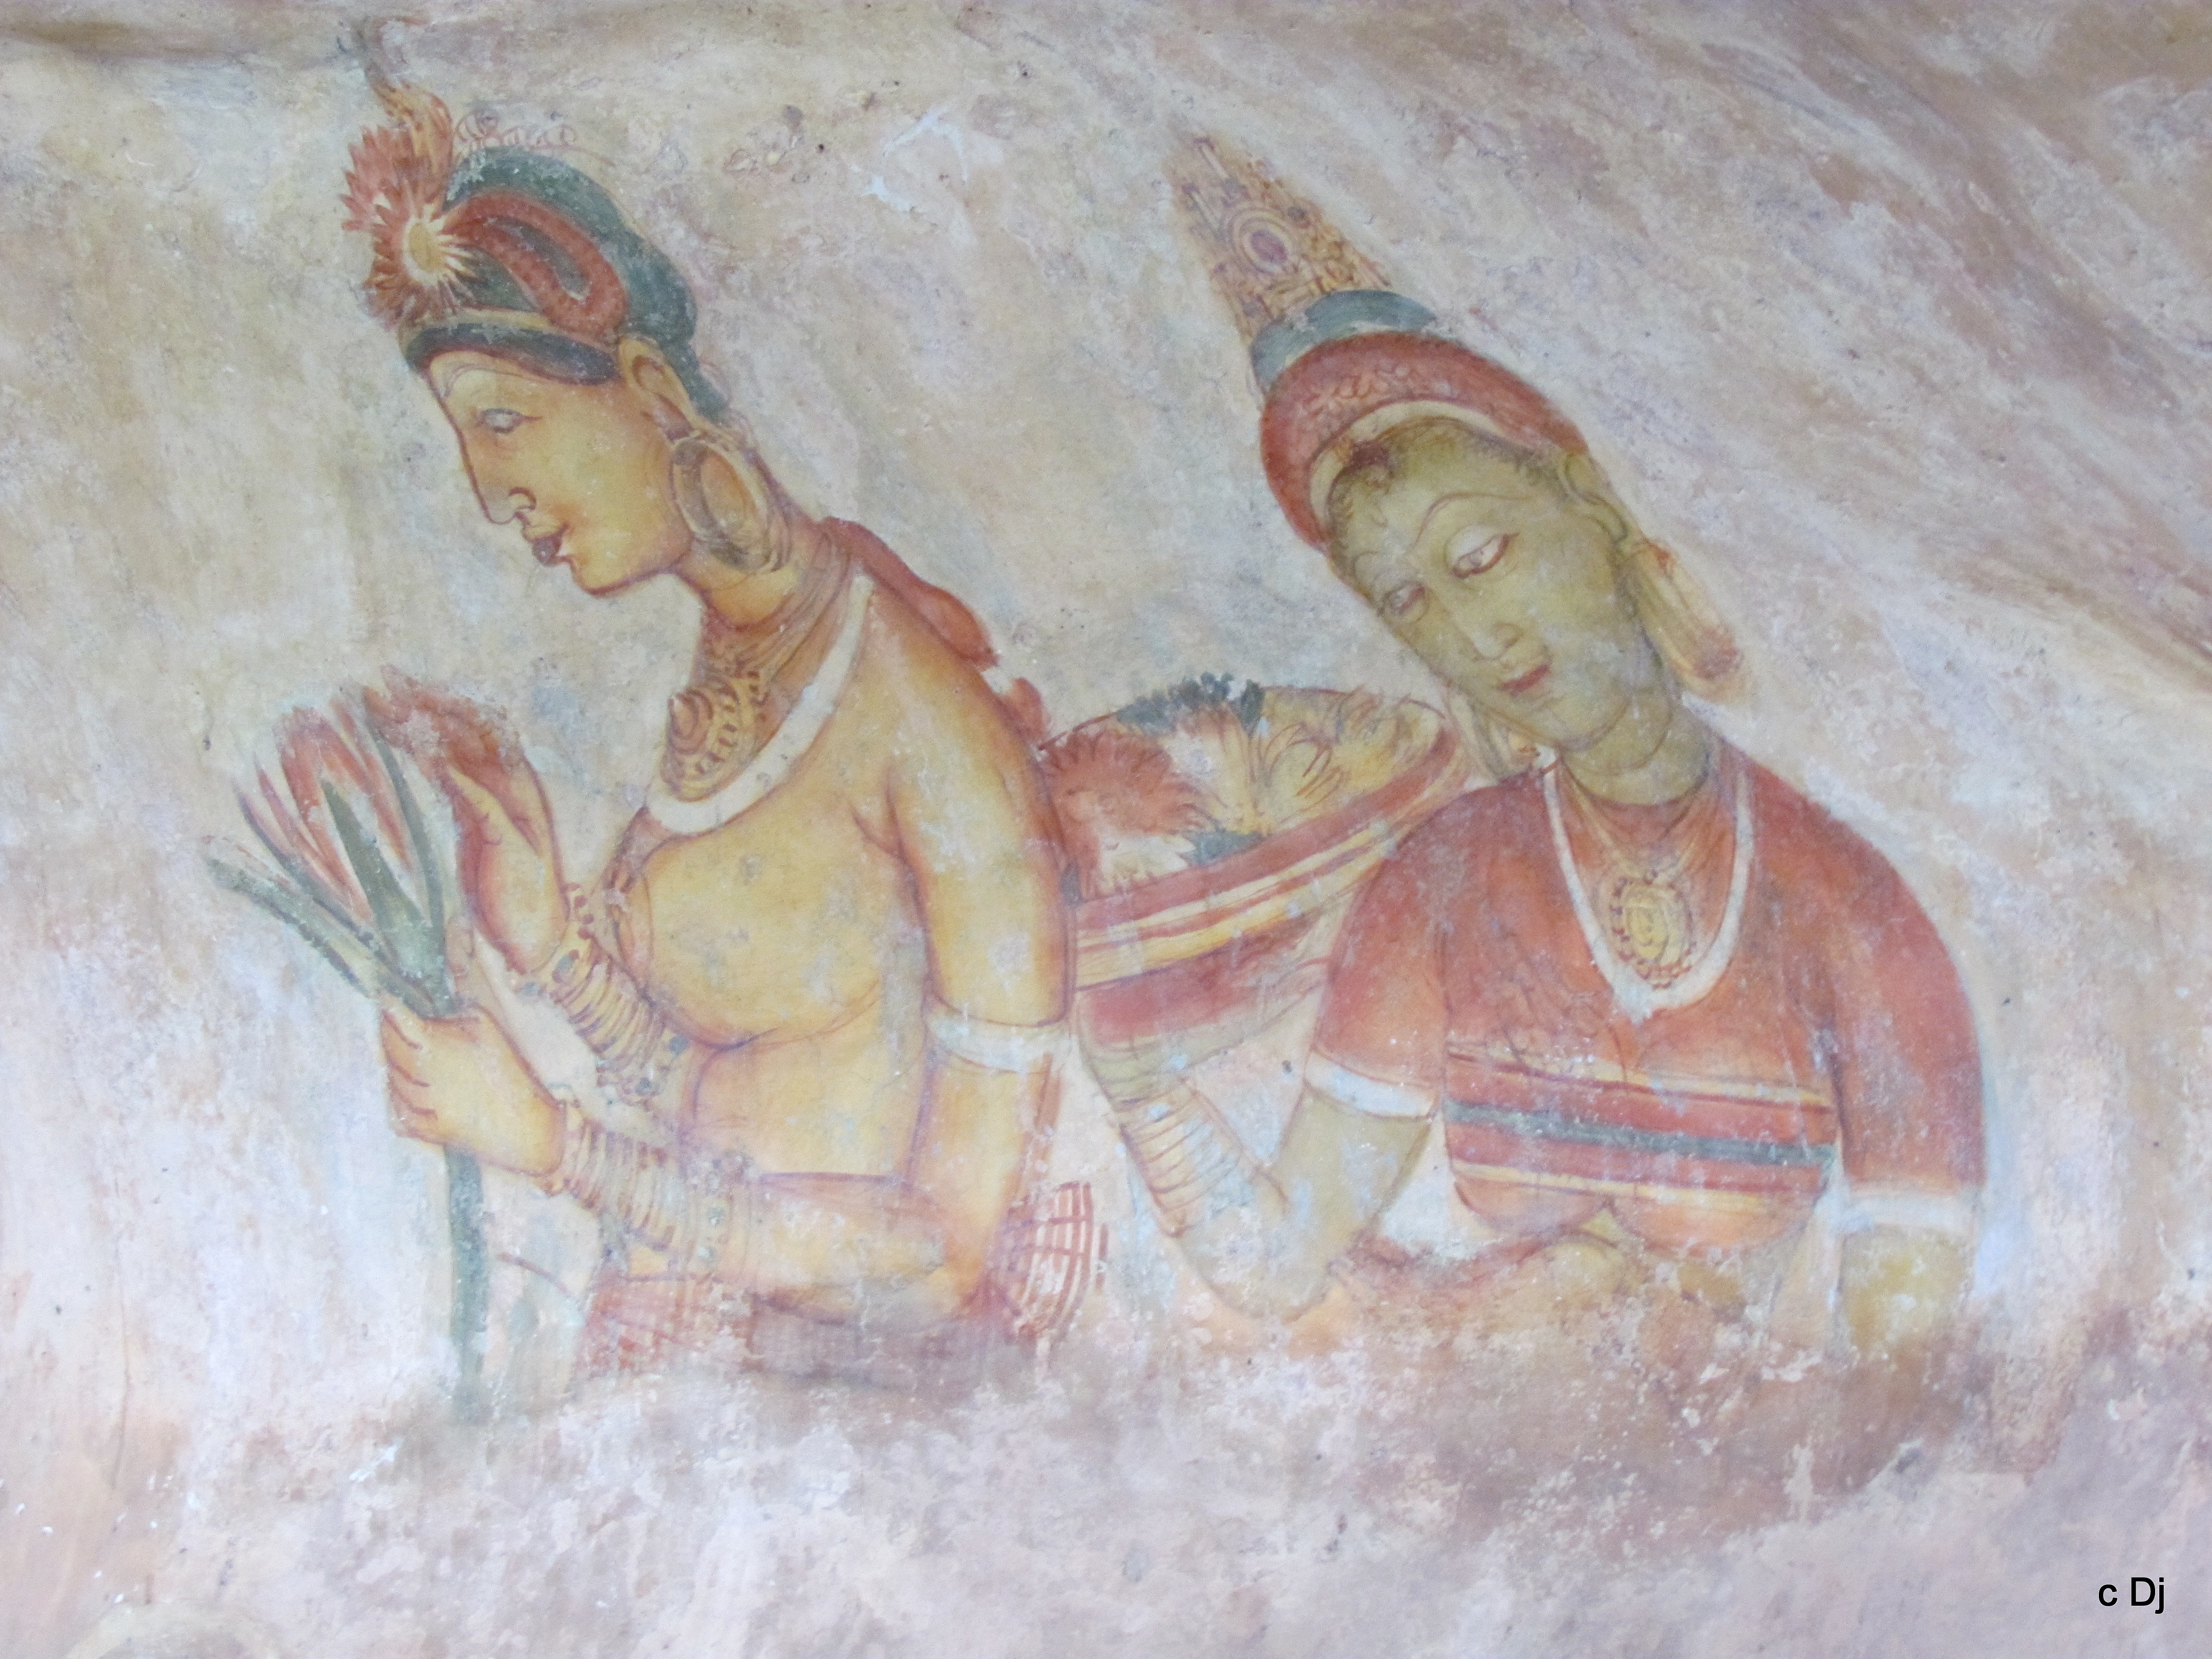 Sri Lanka, Sigiriya, Ancient Frescoes